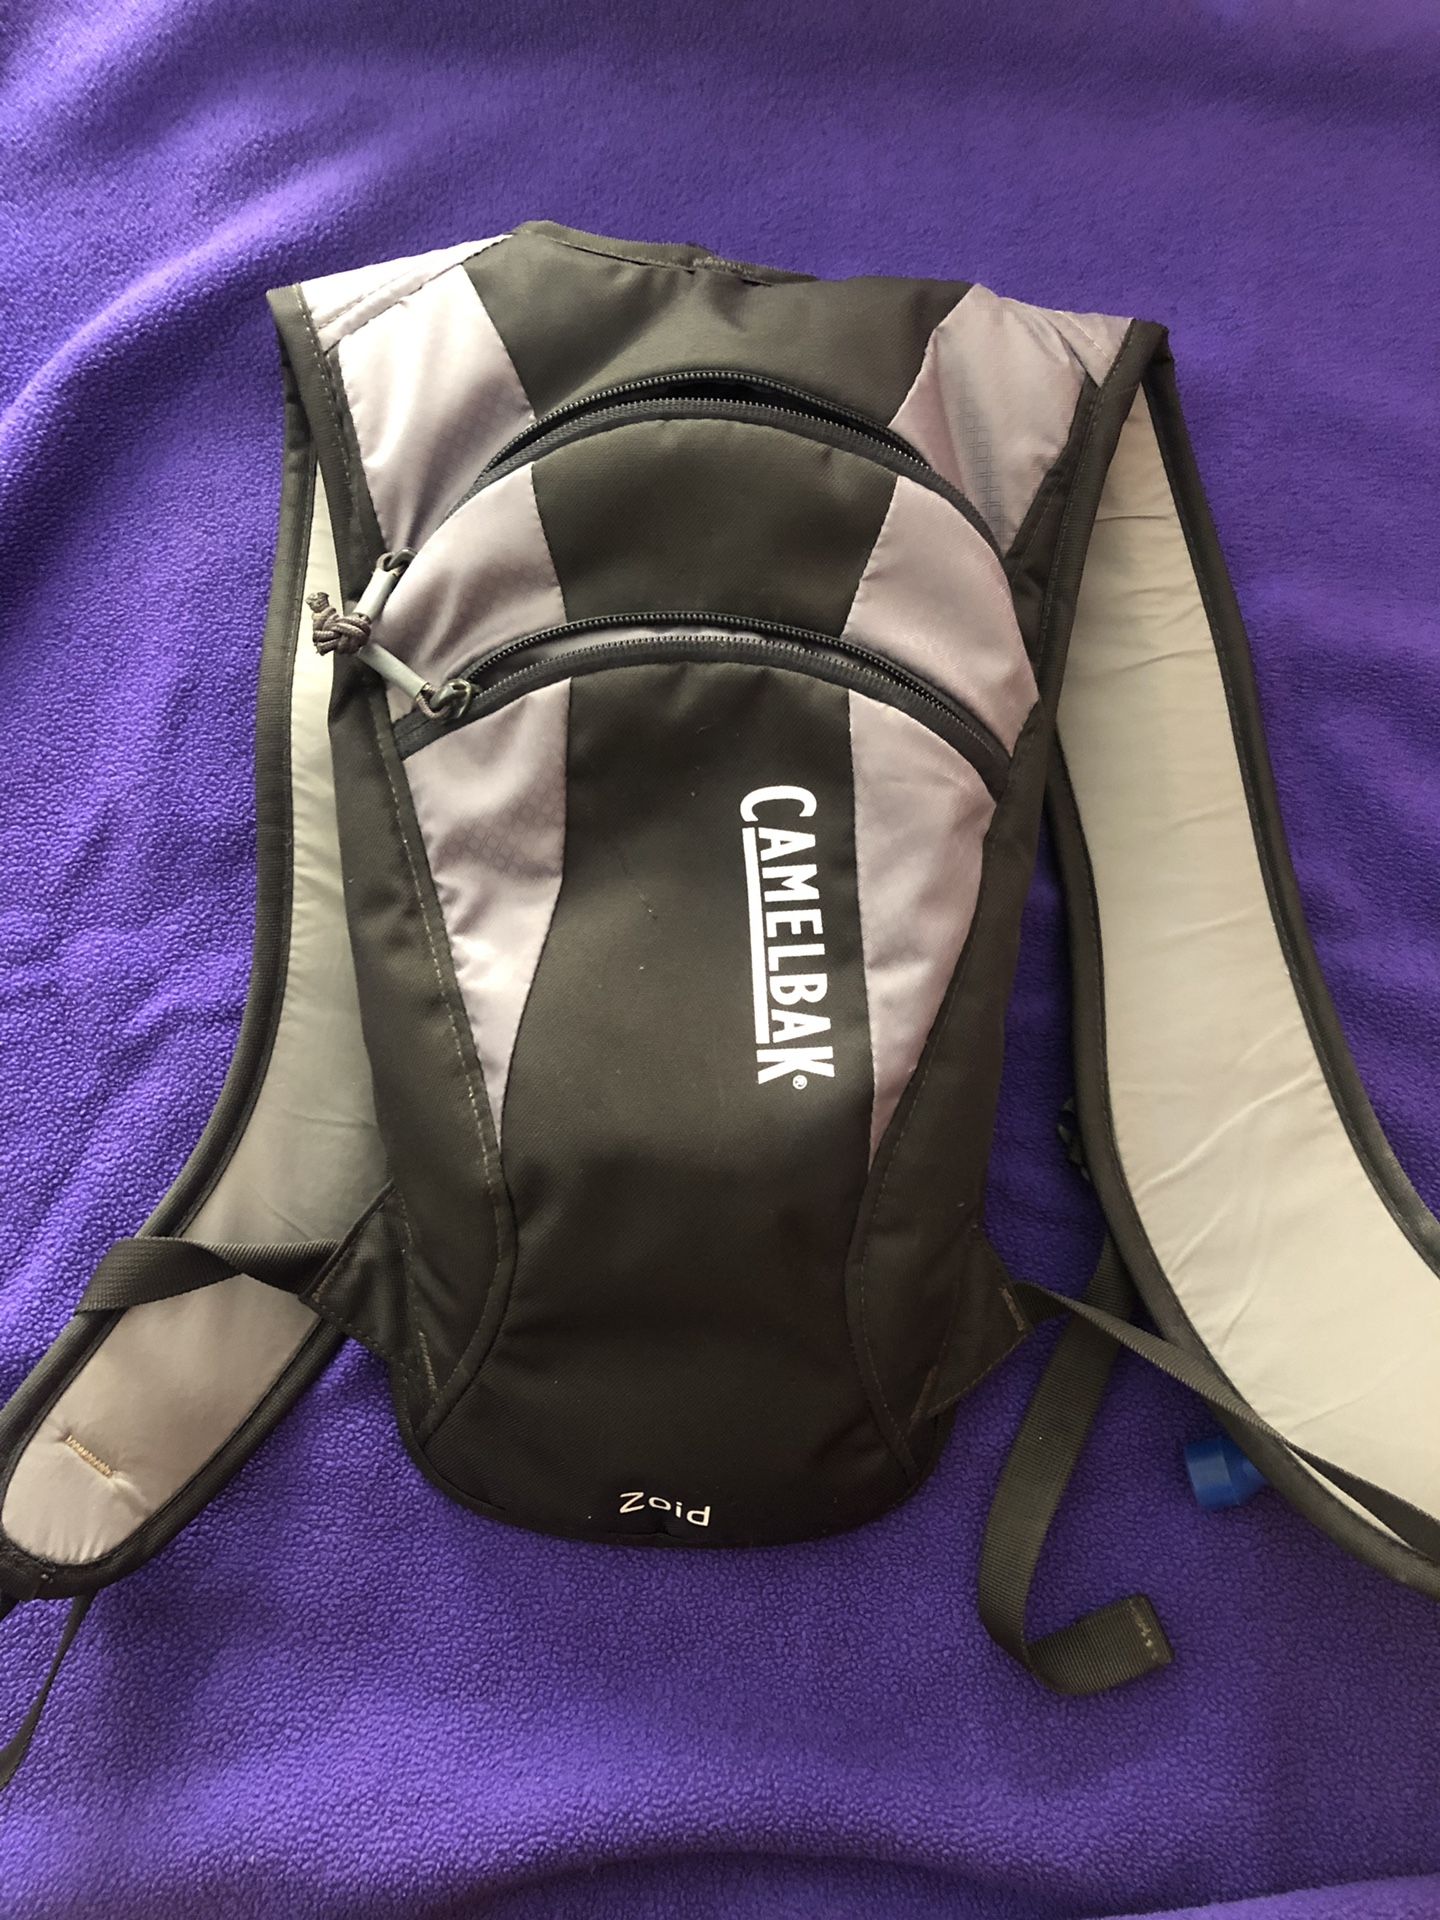 Camelbak hydration backpack